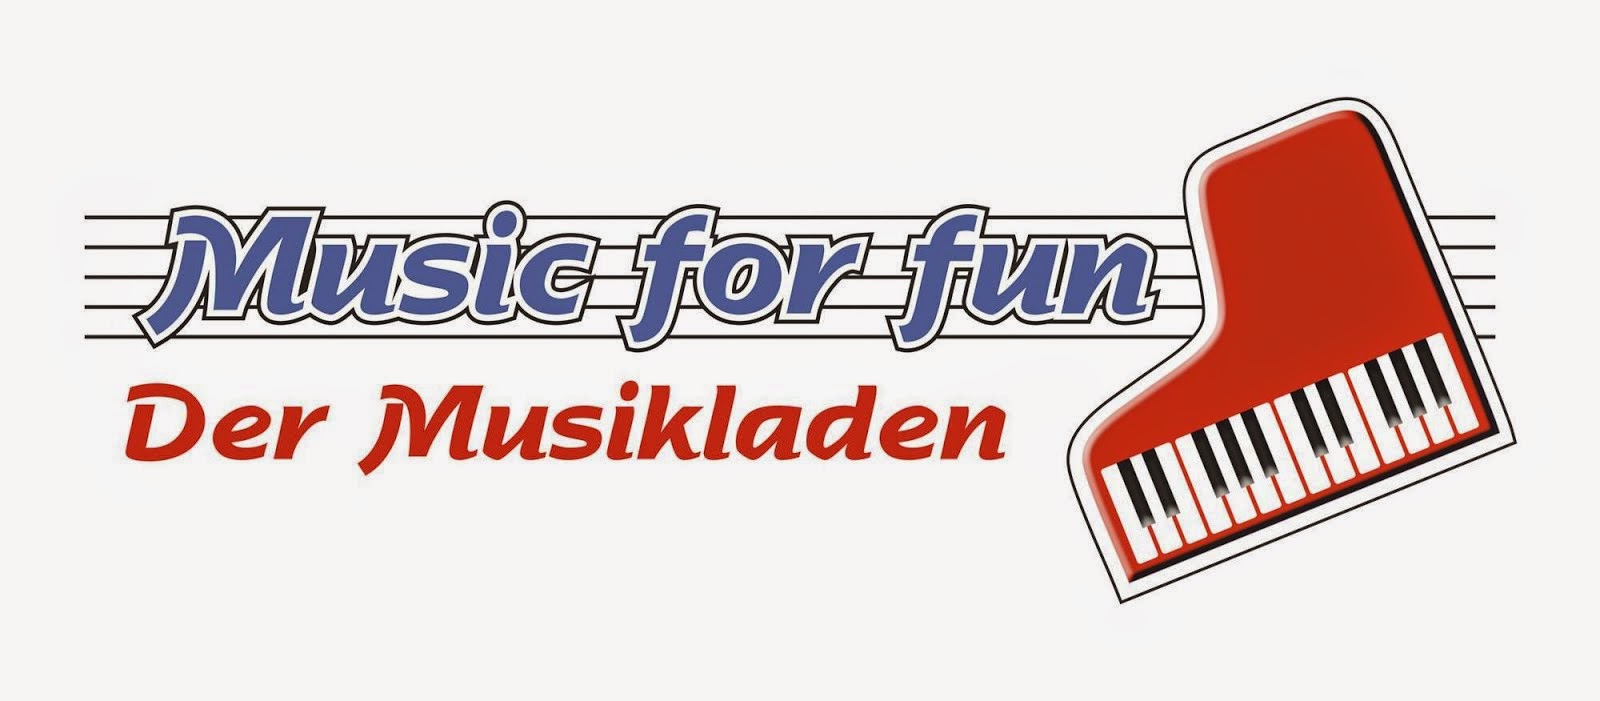 Music for fun - Musikladen